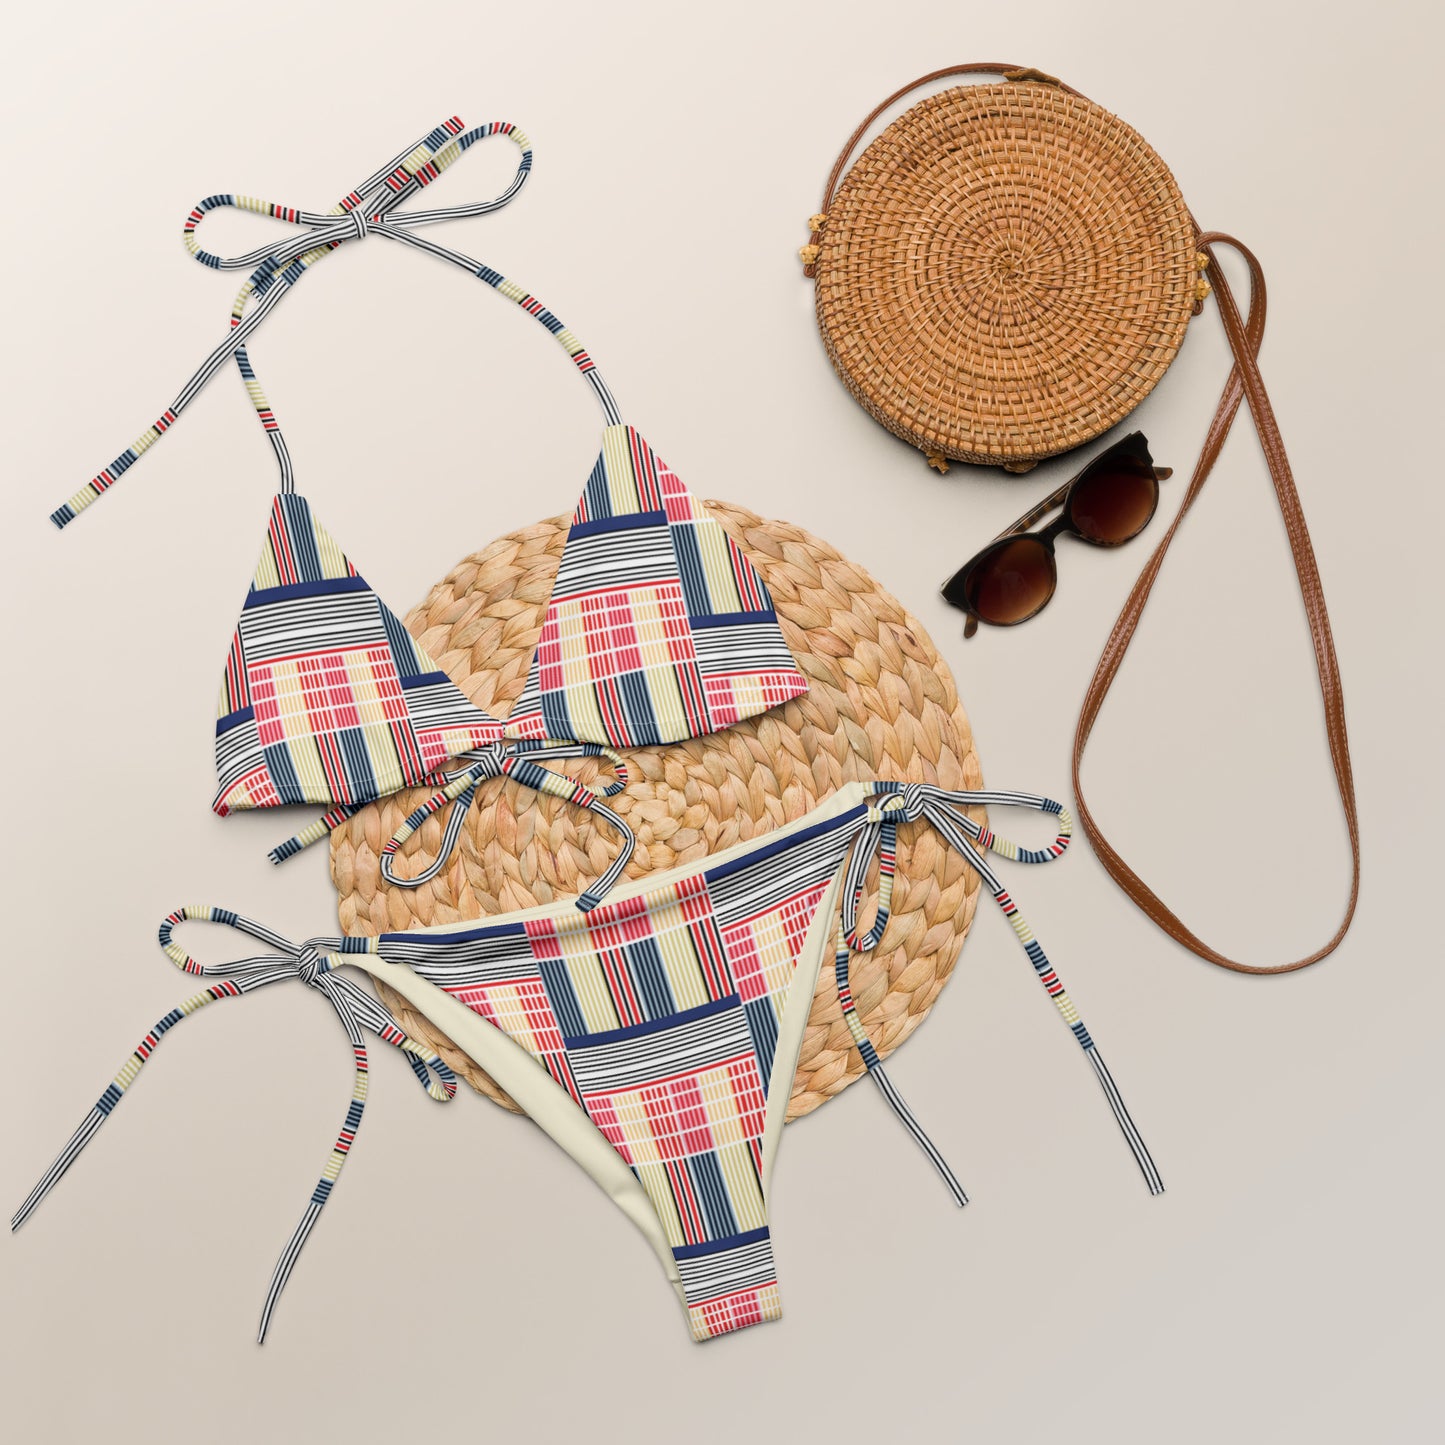 String Bikini (Glamourange Women Swimwear By Patterns - 0031 Model)